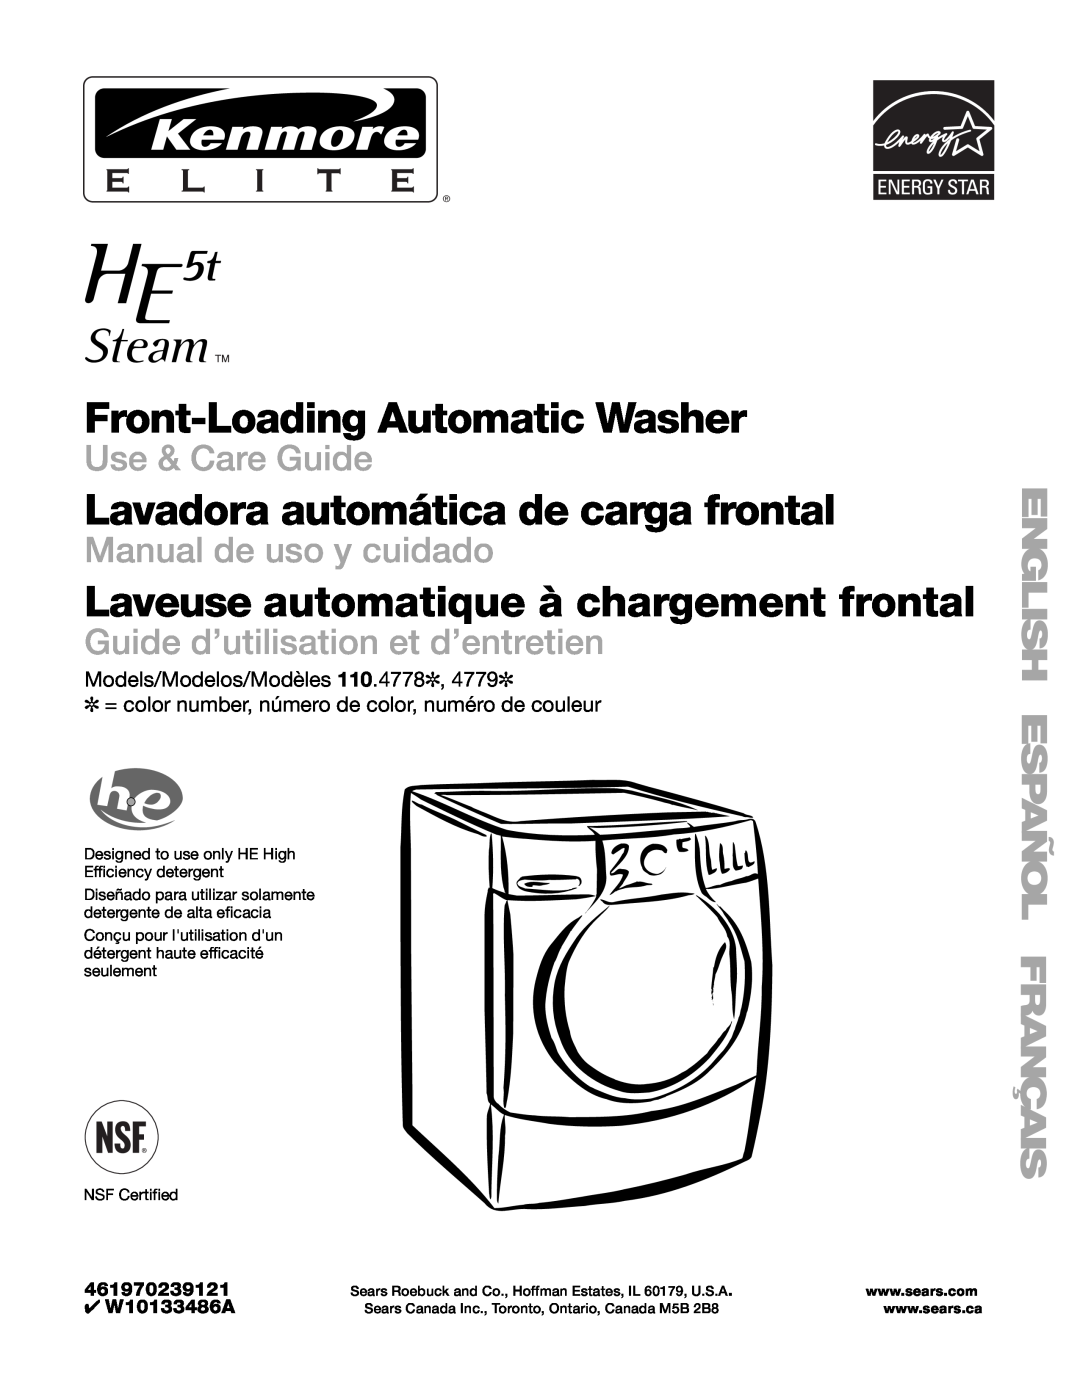 Sears 110.4778* manual 461970239121, W10133486A, Front-Loading Automatic Washer, Lavadora automática de carga frontal 